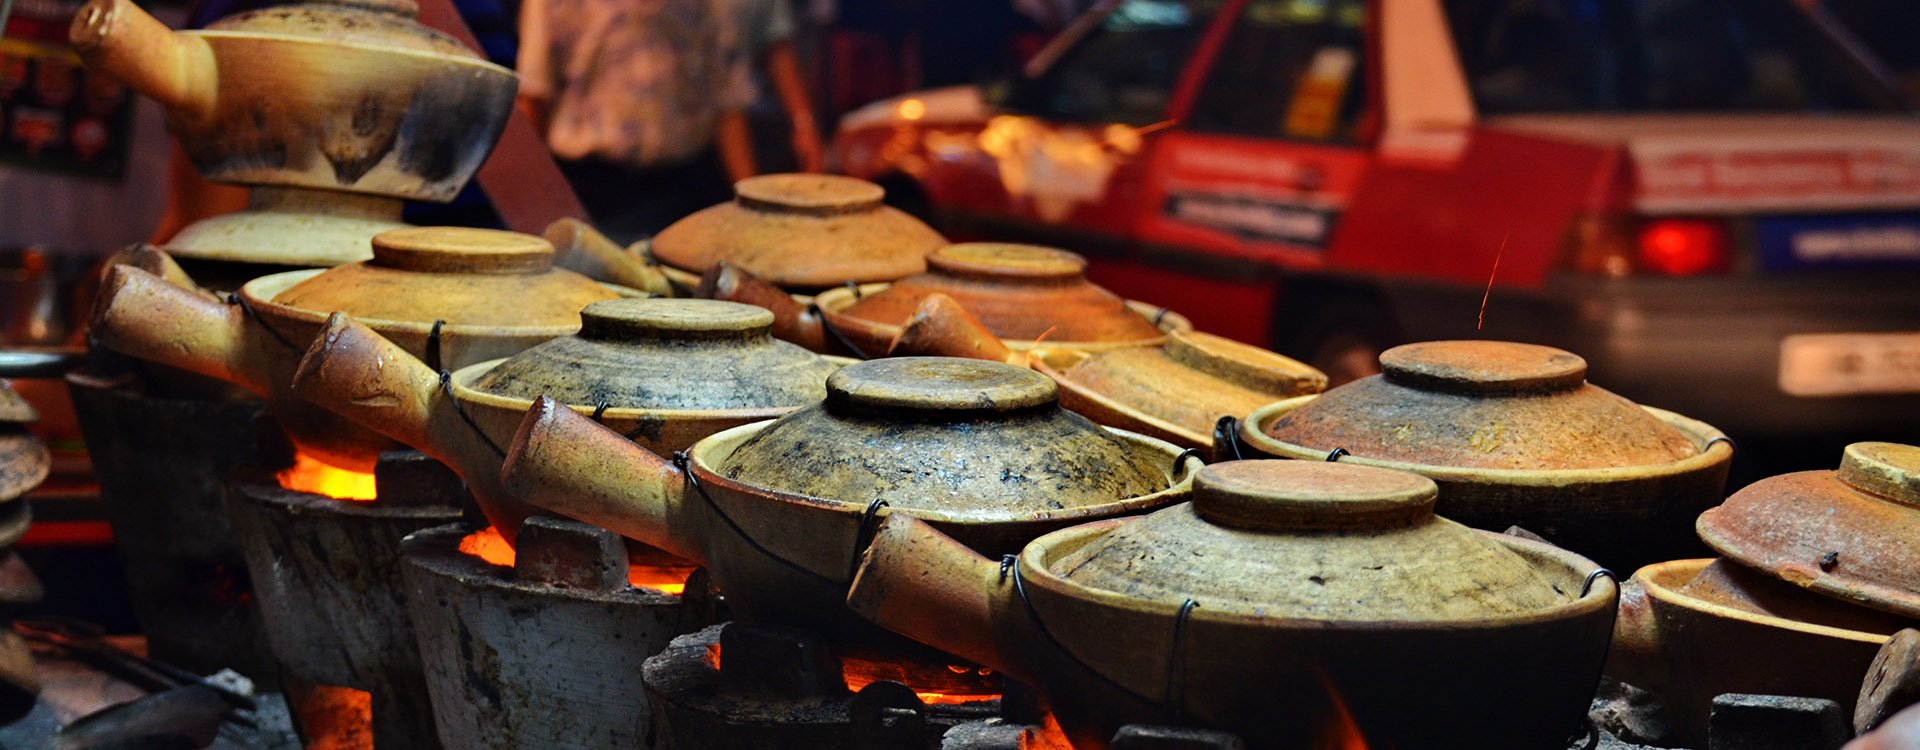 Claypot on coal stoves, traditional food Kuala Lumpur Malaysia